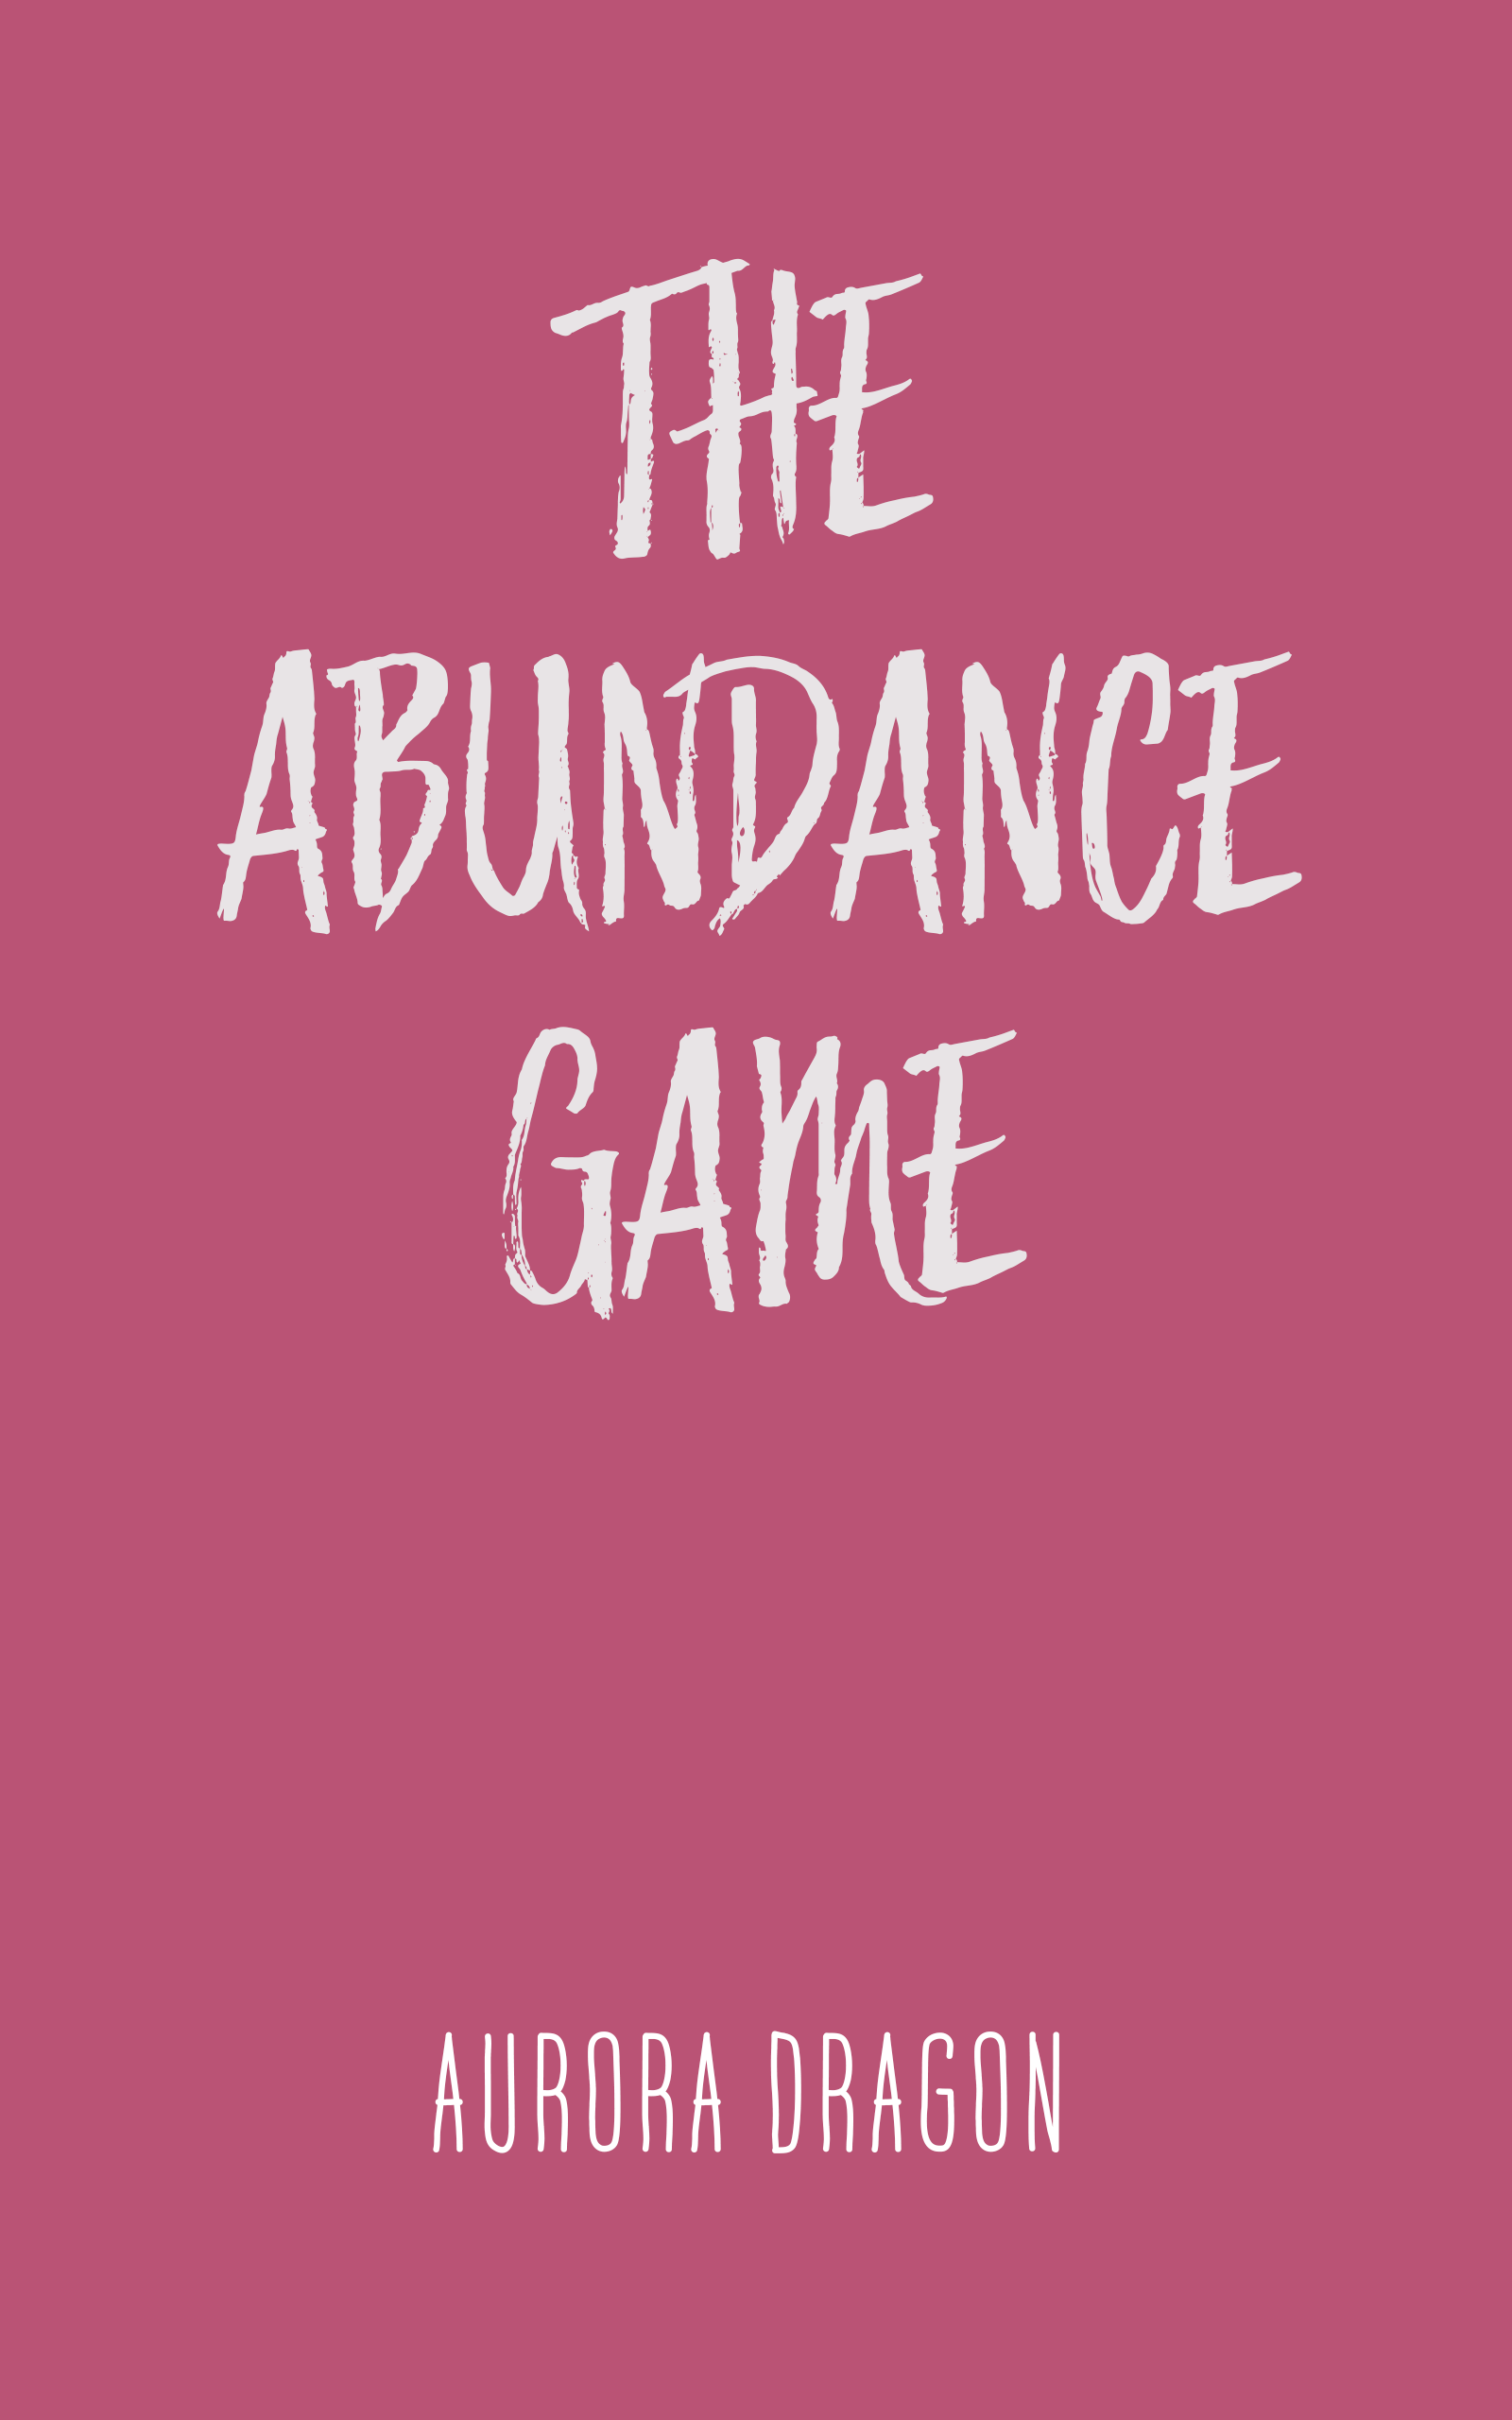 FREE: The Abundance Game by Aurora Dragon